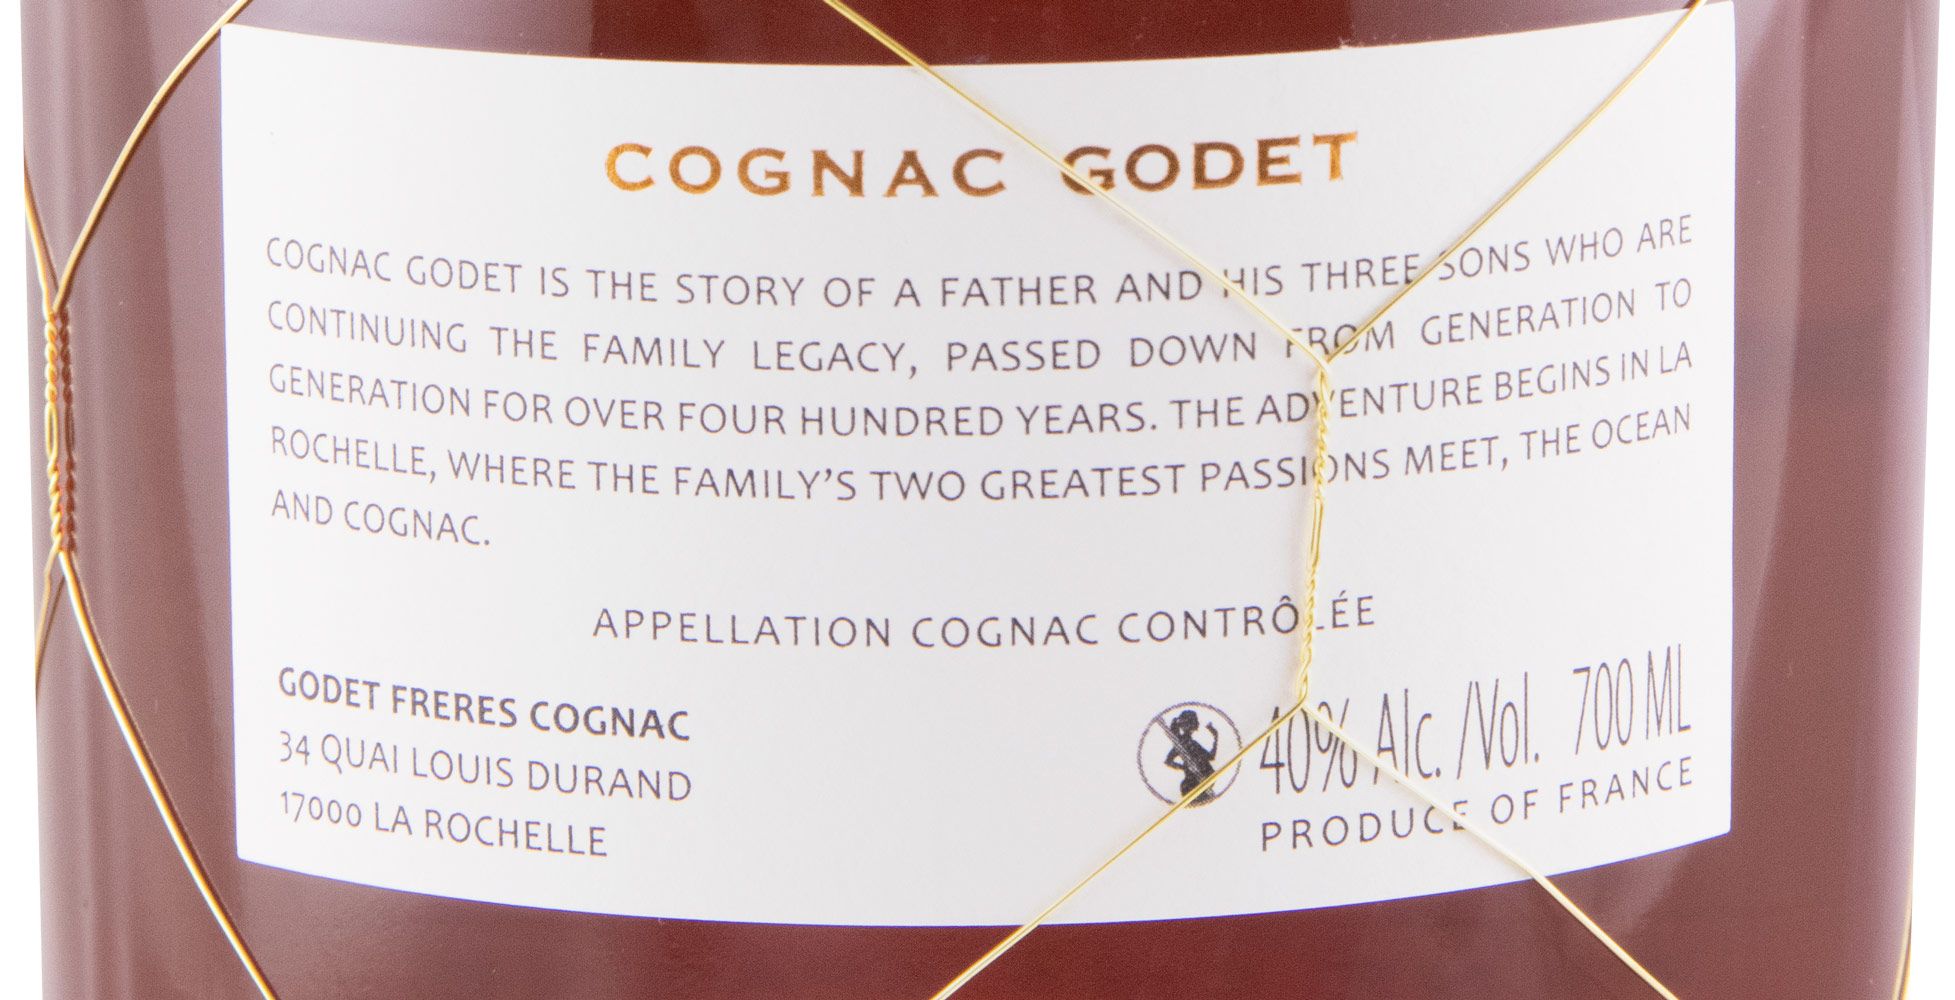 Godet XO Fine Champagne Cognac - 70cl 